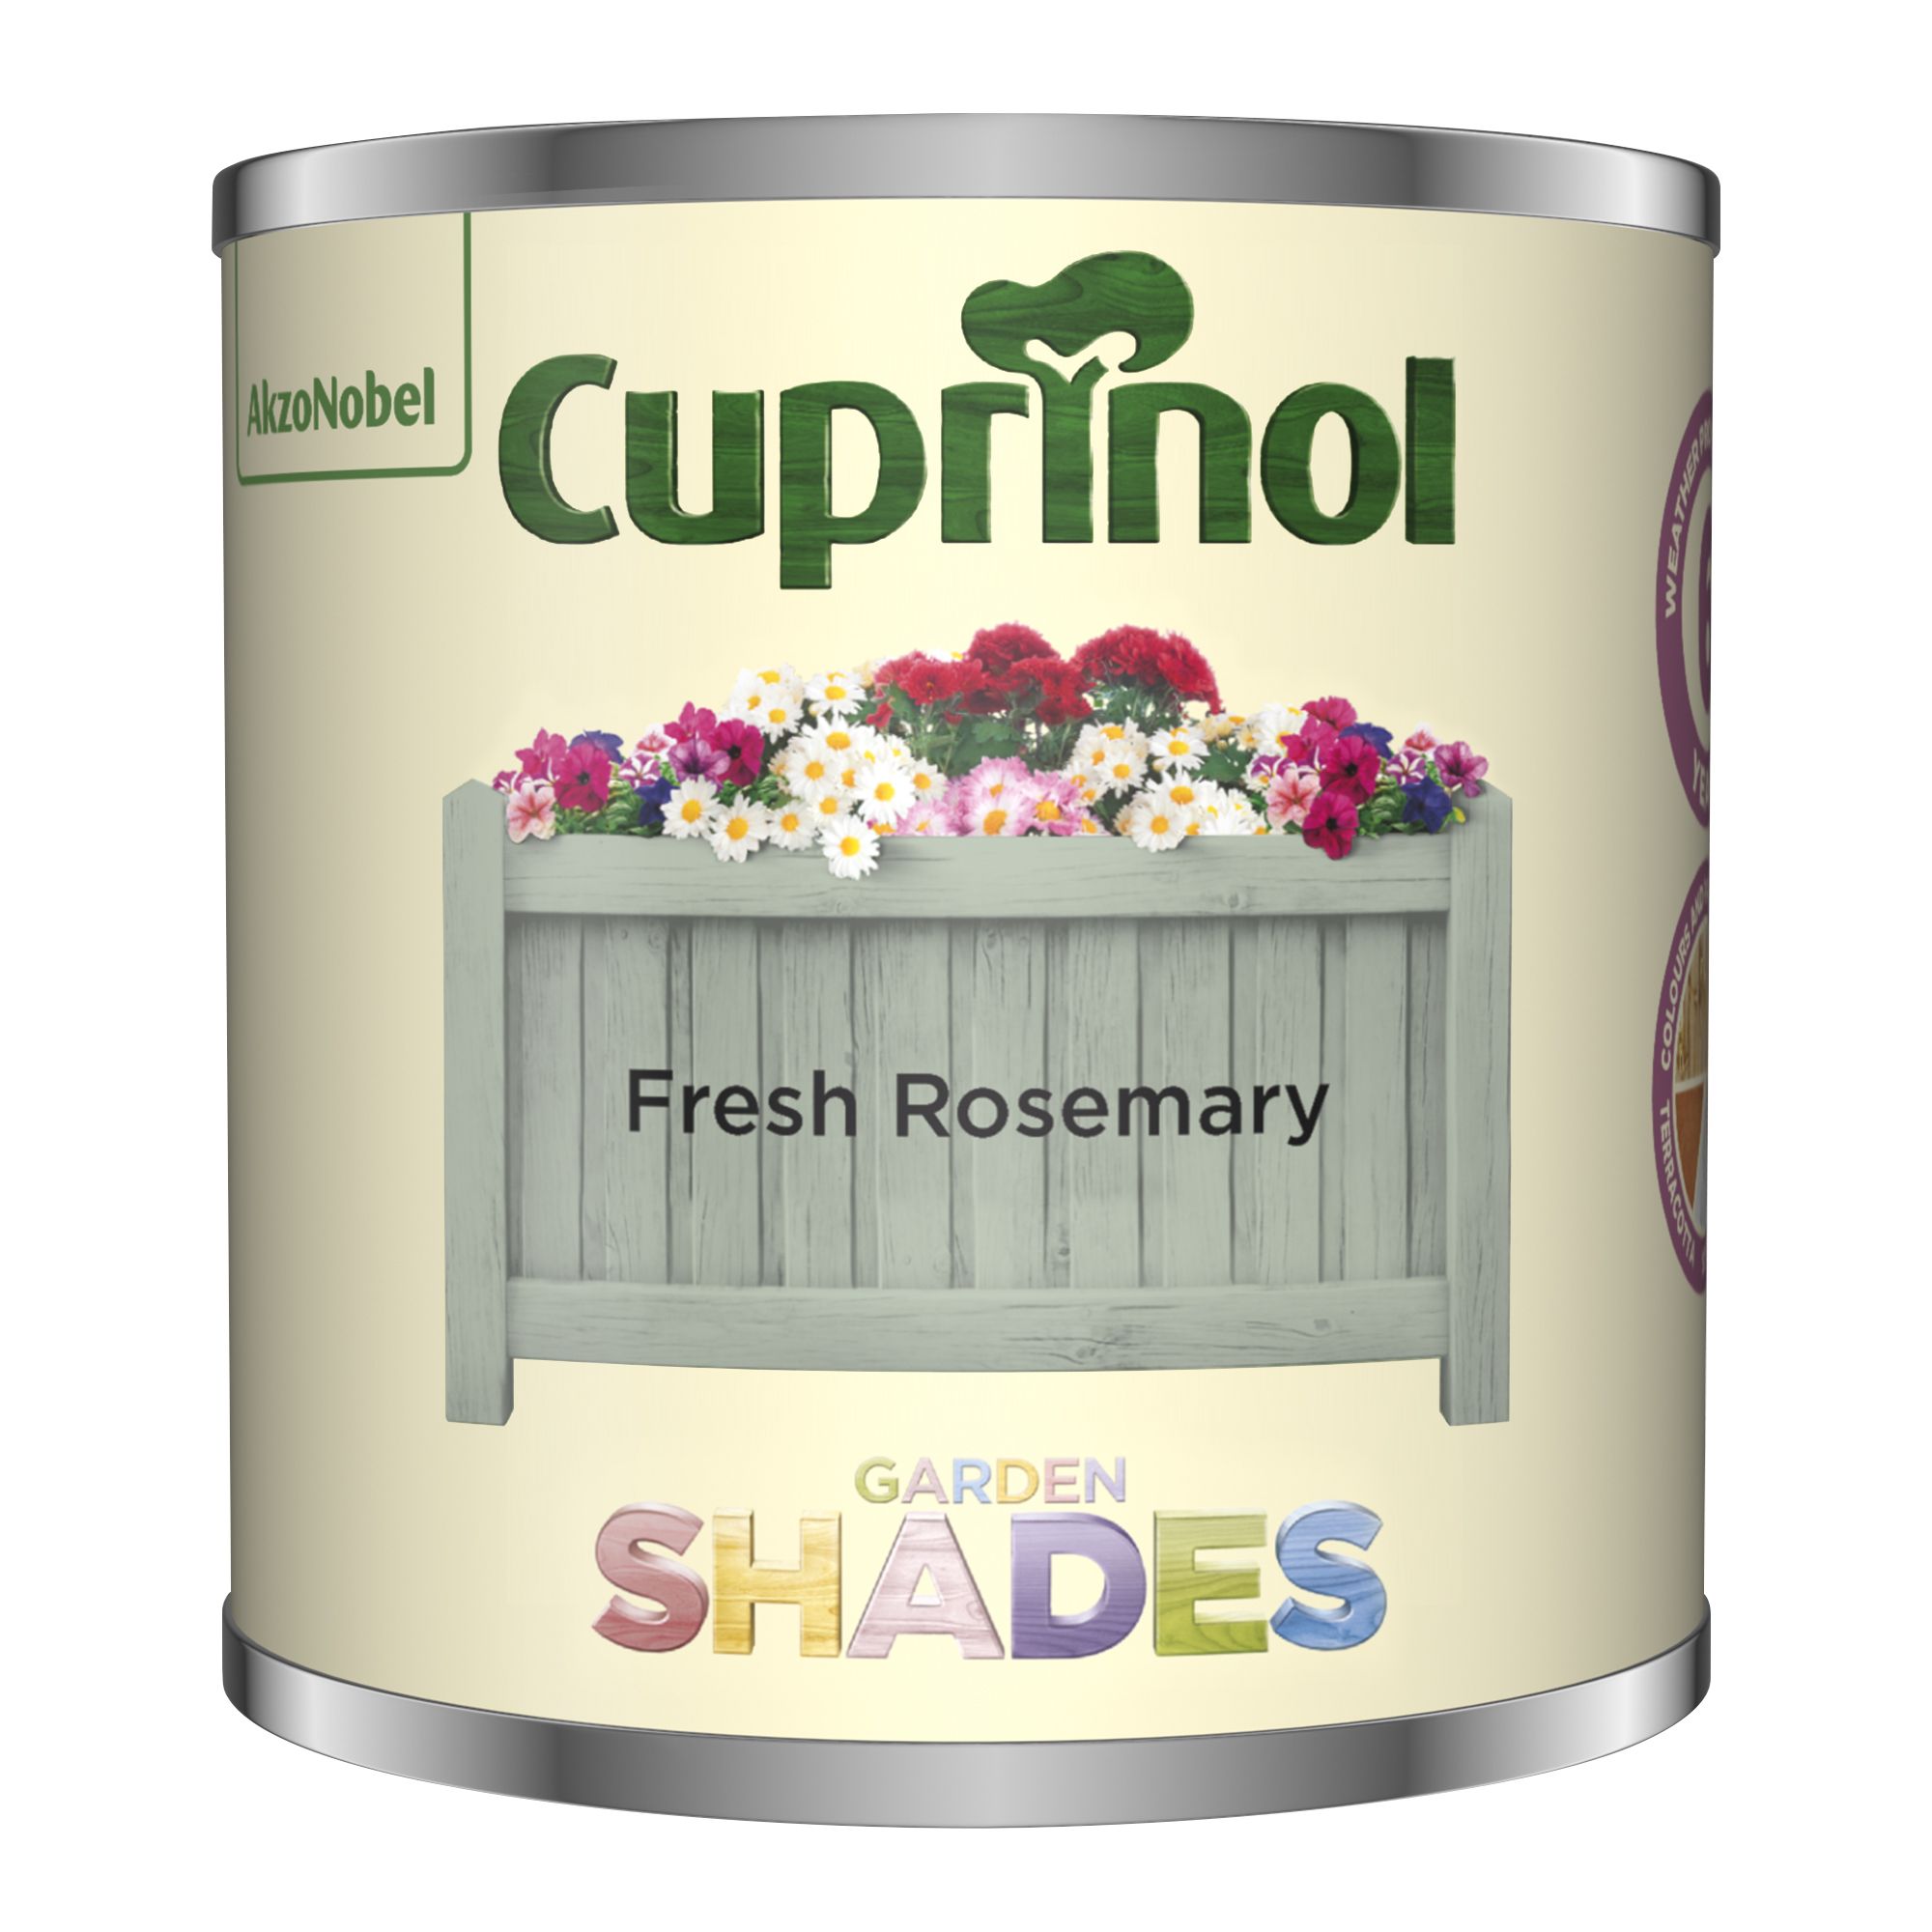 Cuprinol Garden shades Fresh Rosemary Matt Multi-surface Garden Wood paint, 125ml Tester pot